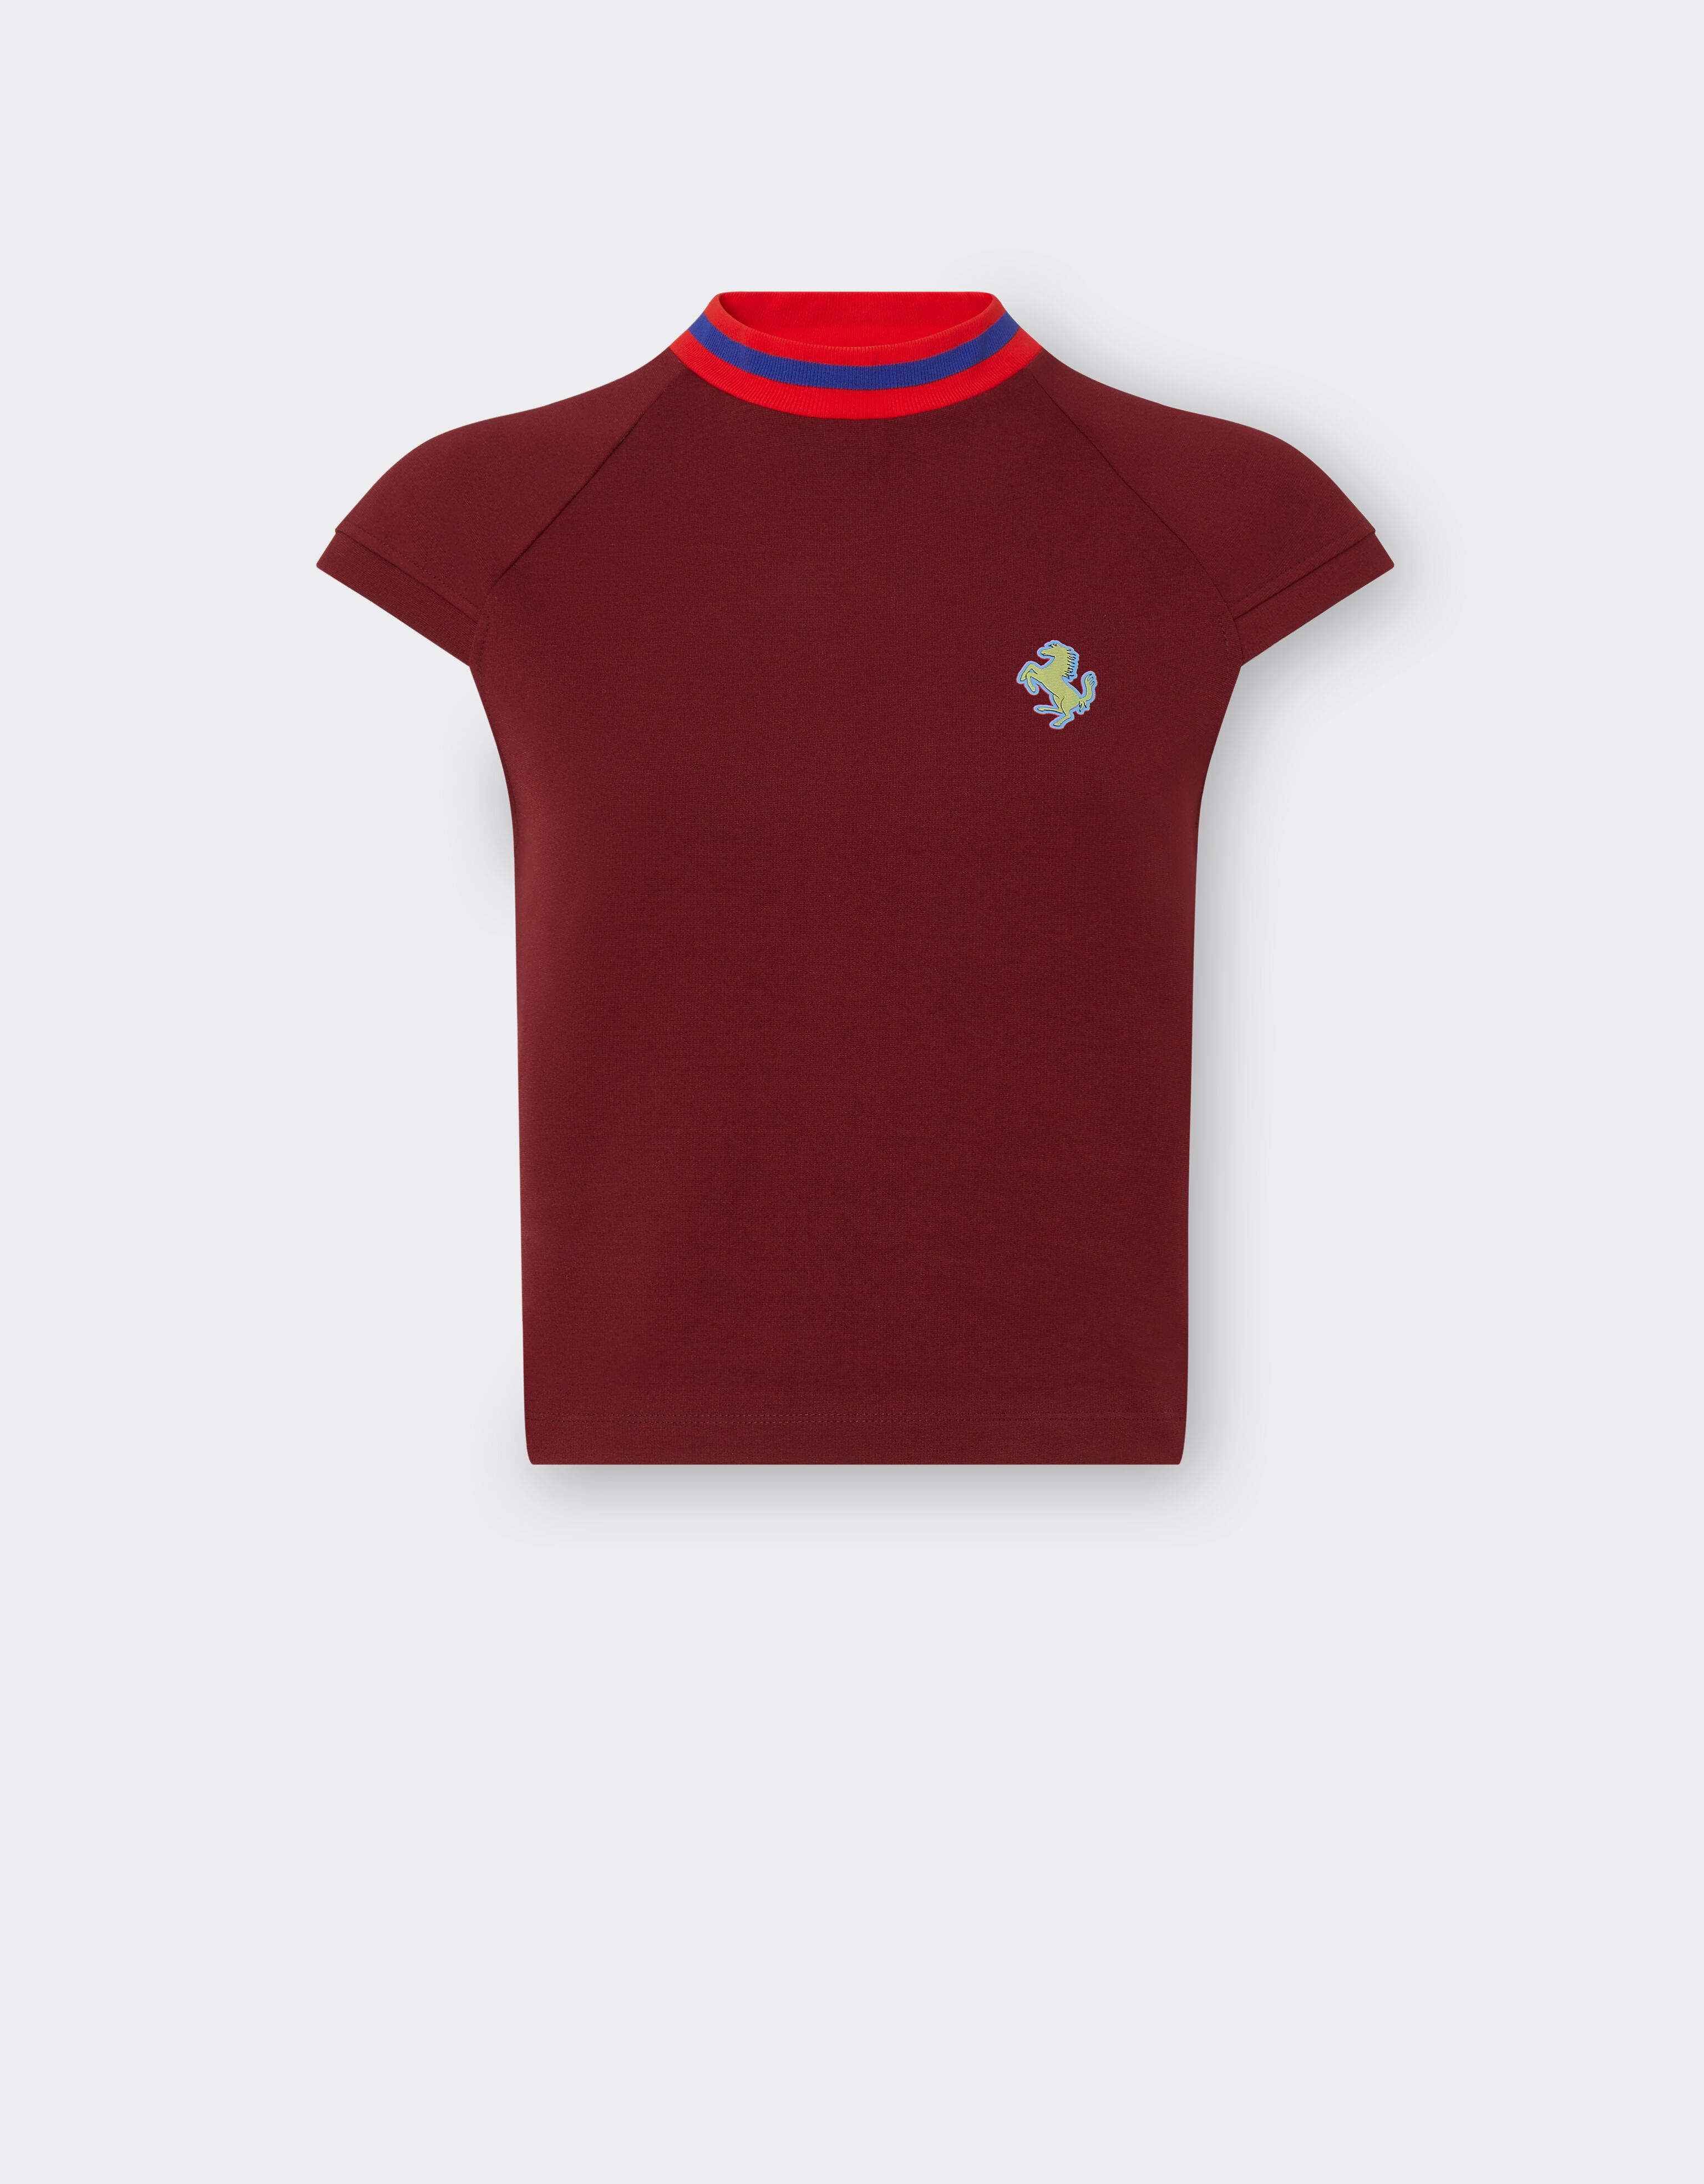 Ferrari T-shirt with Ferrari logo Burgundy 48306f